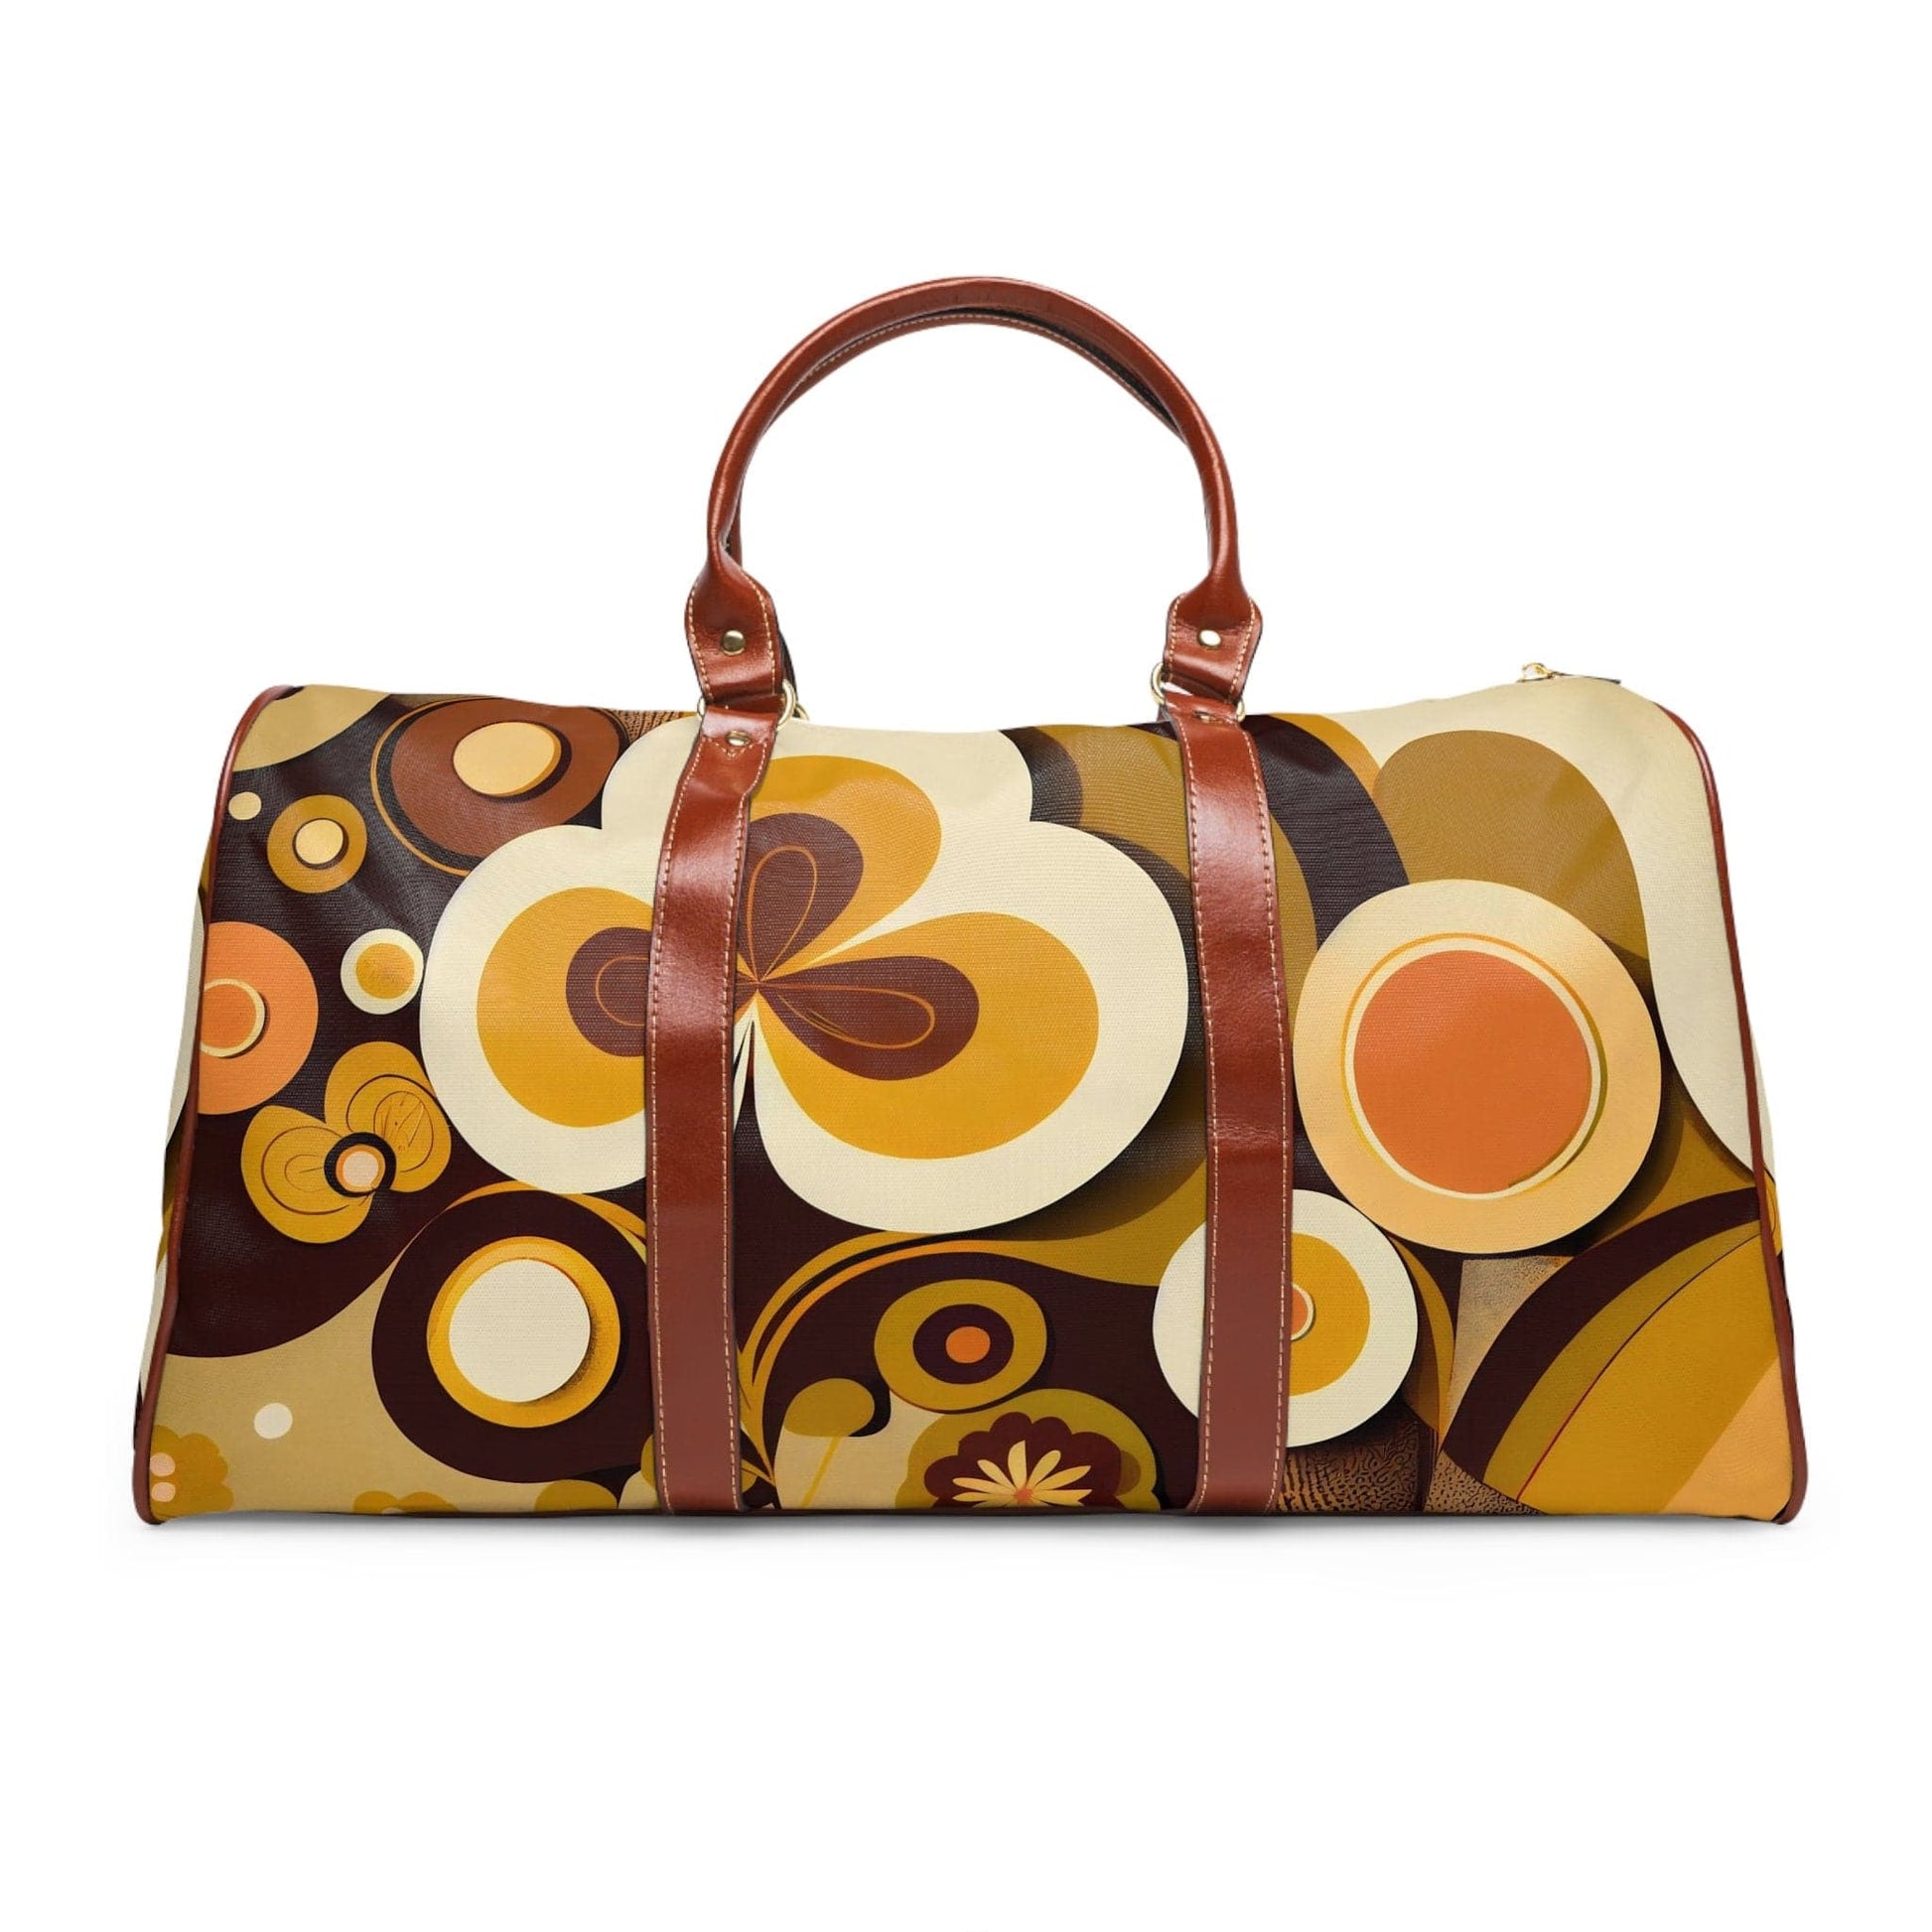 1960s/ 70s Louis Vuitton Traveling Monogram Suitcase - Leather